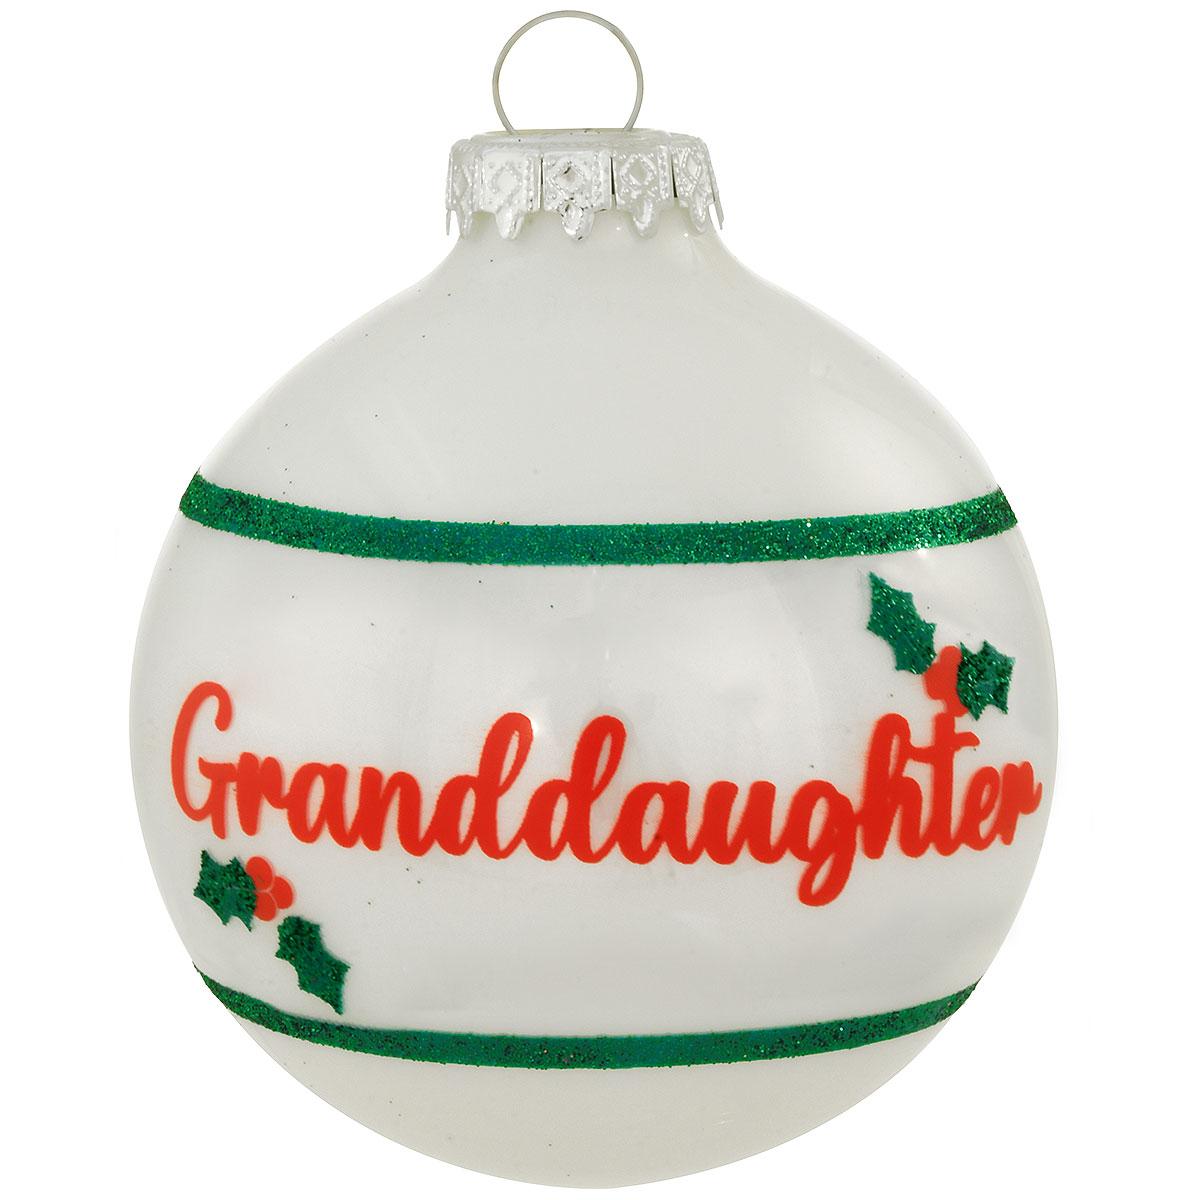 Granddaughter Glass Ornament